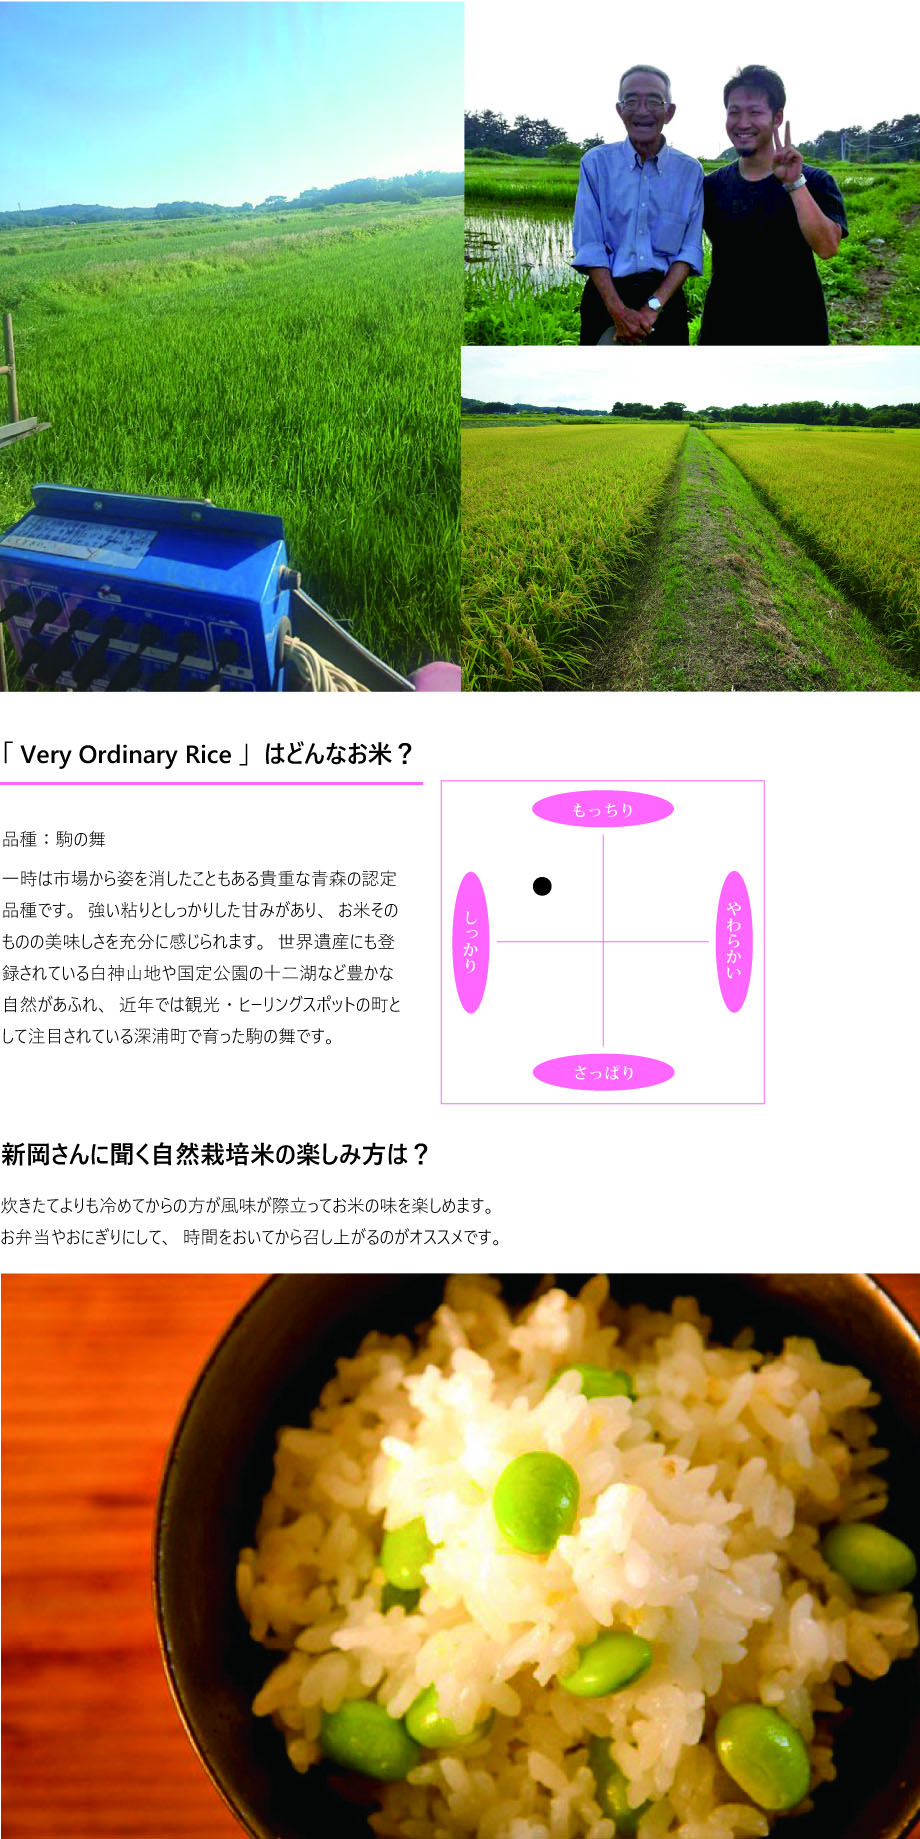 (R02産)Very Ordinary Rice白米1kg